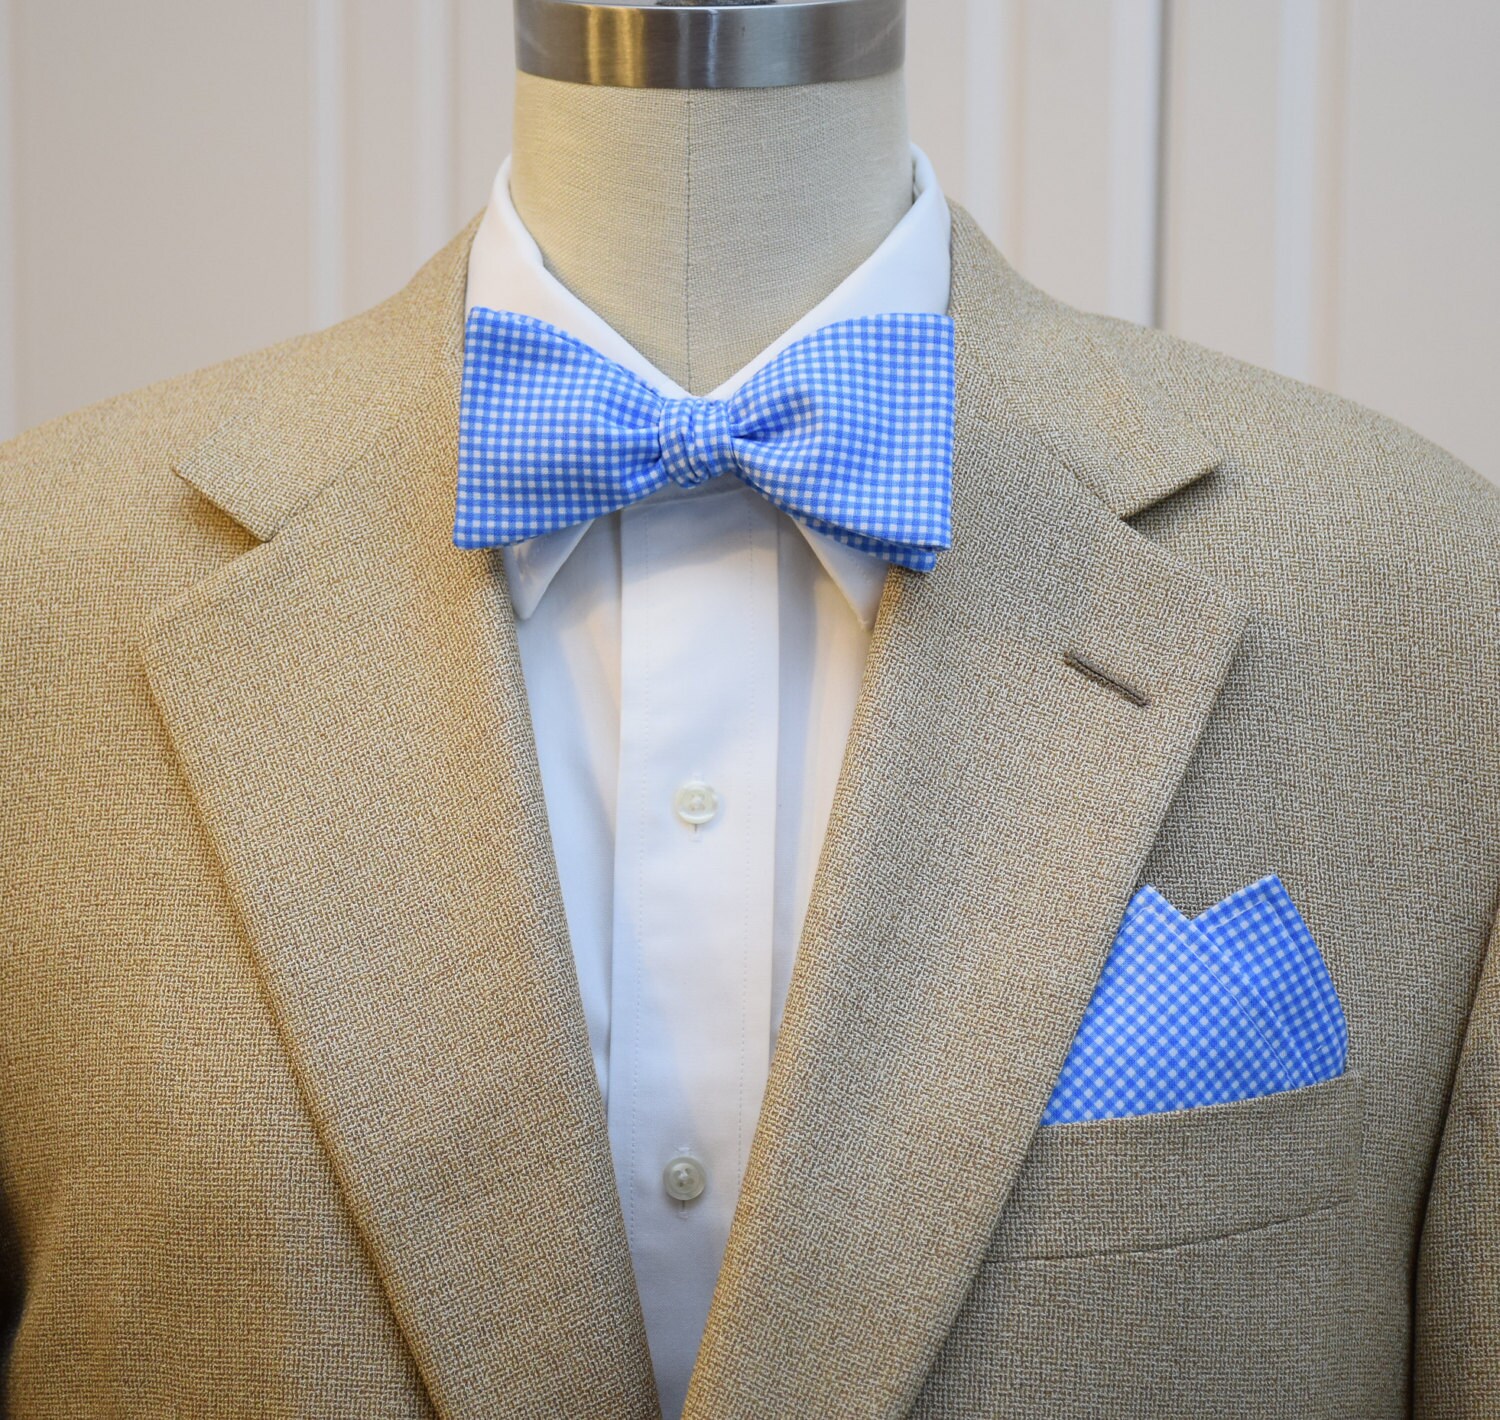 Men's Pocket Square & Bow Tie pool blue gingham wedding | Etsy